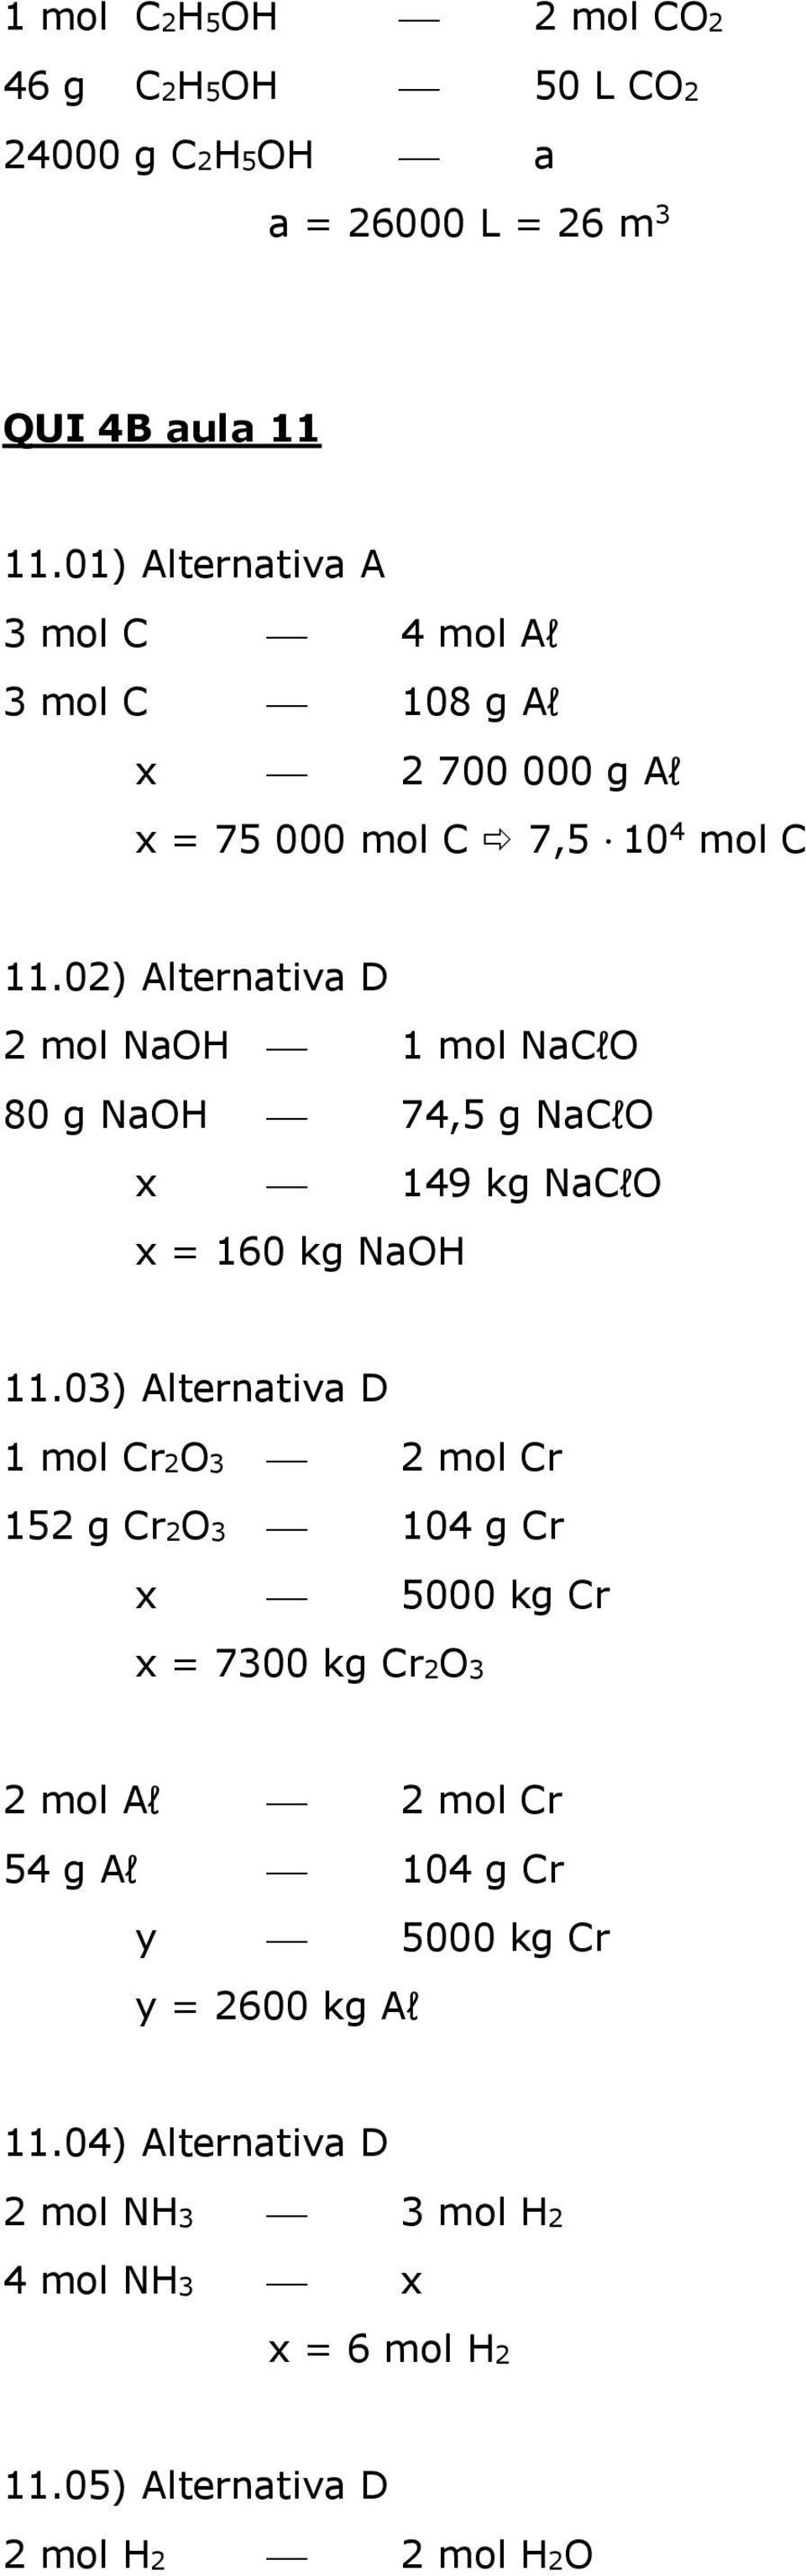 02) Alternativa D 2 mol NaOH 1 mol NaClO 80 g NaOH 74,5 g NaClO x 149 kg NaClO x = 160 kg NaOH 11.